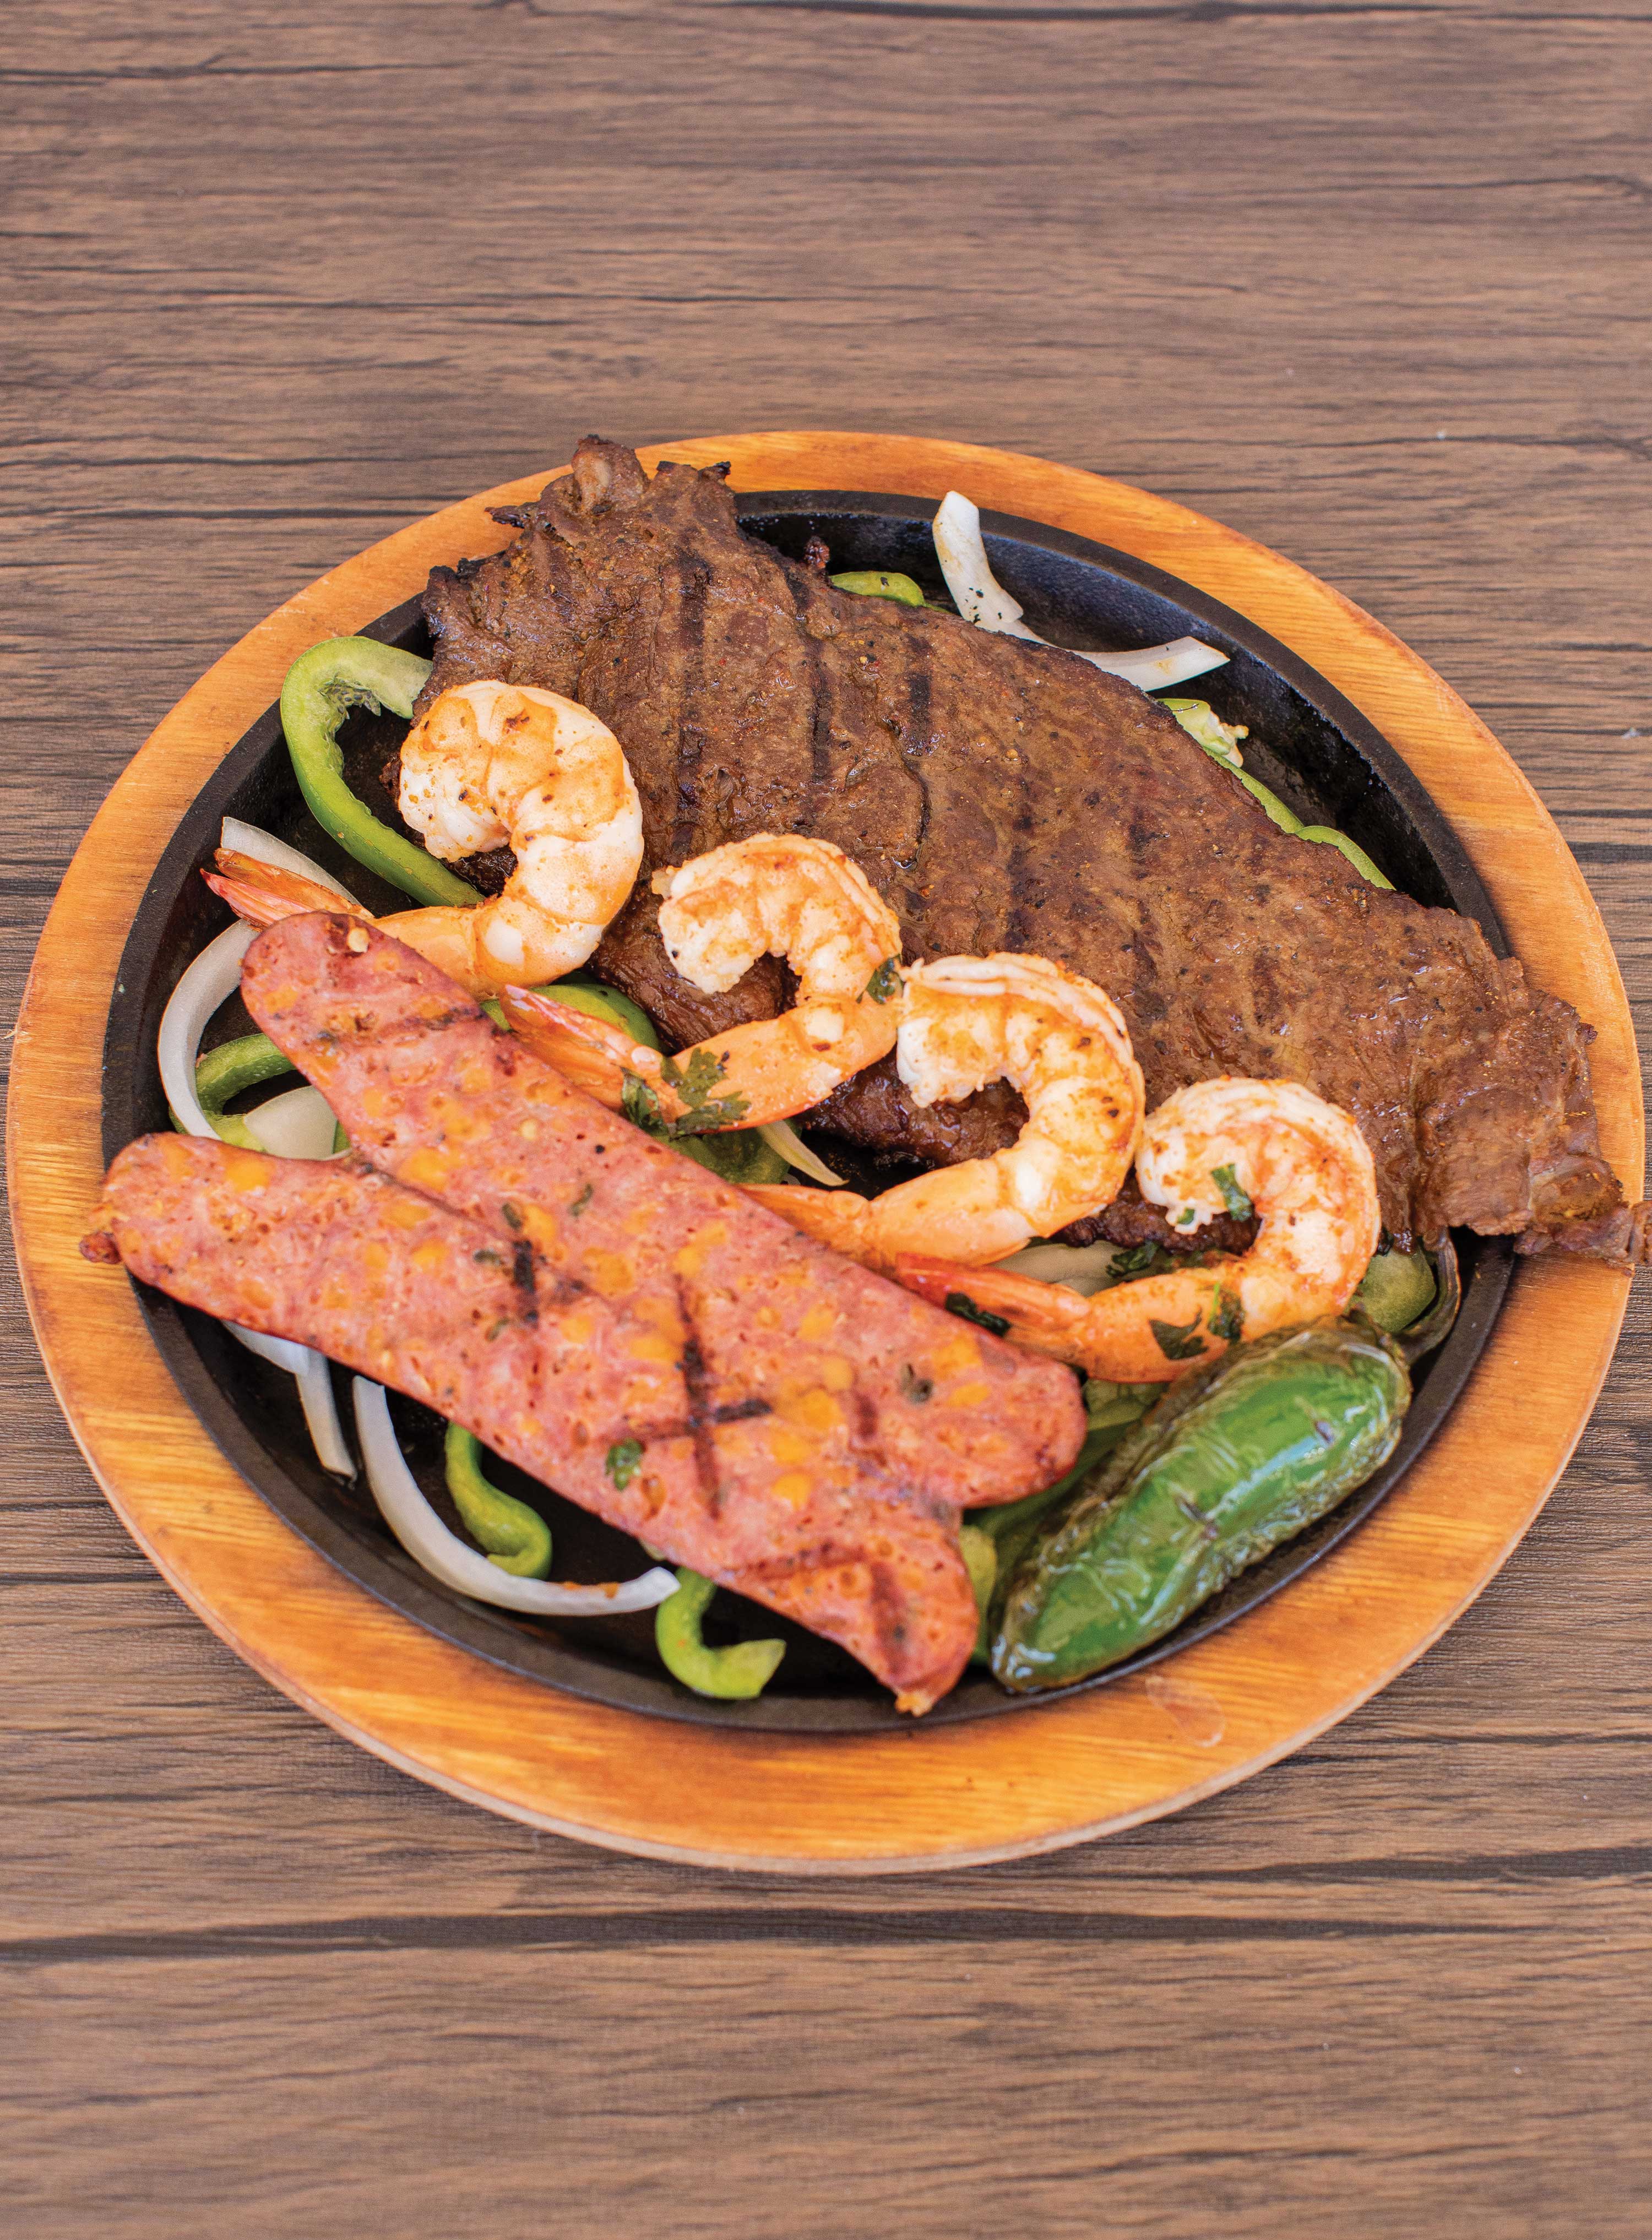 Image: Grilled steak displayed alongside a halved chorizo sausage and 4 grilled shrimp.